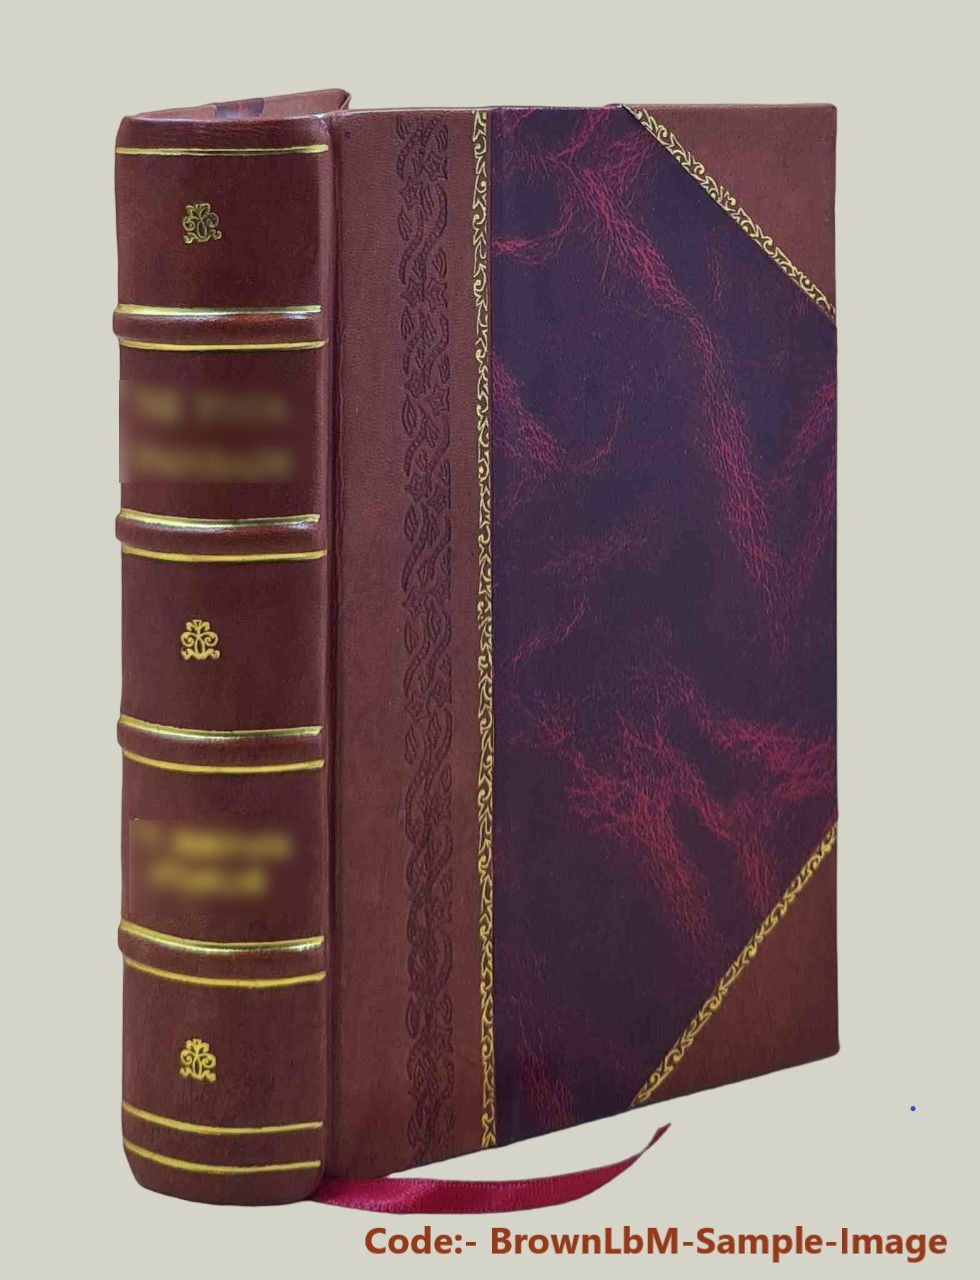 Patrologiae cursus completus: sive biblioteca universalis,integra uniformis, commoda, oeconomica . (1863)[Leather Bound] - Jacques-Paul Migne